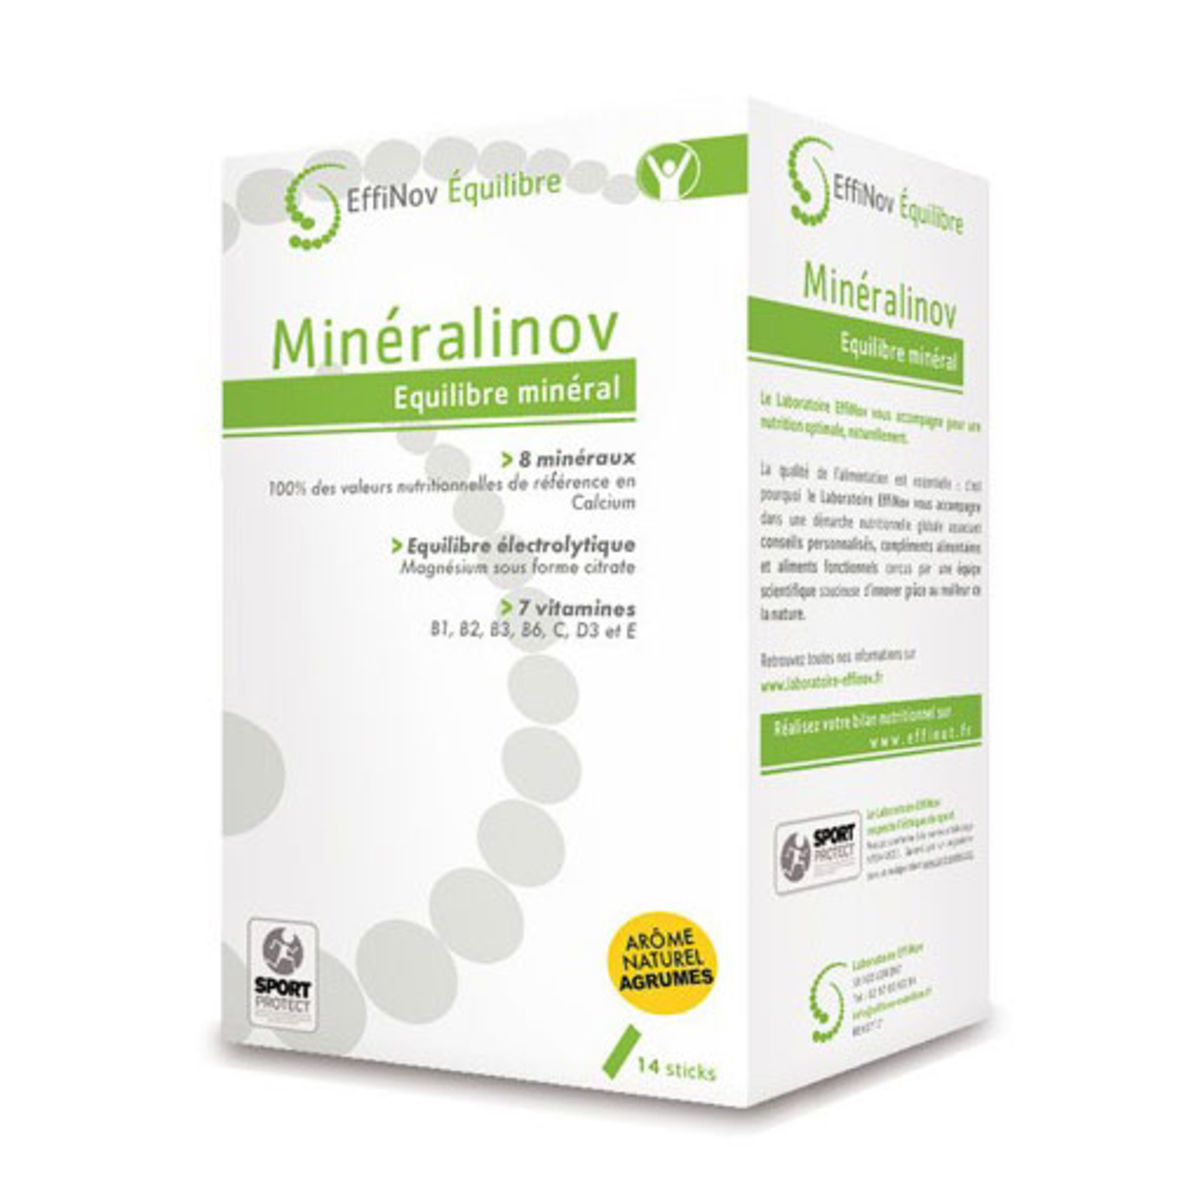 Minéralinov - Complément alimentaire Effinov x 14 sticks - Équilibre acido-basique